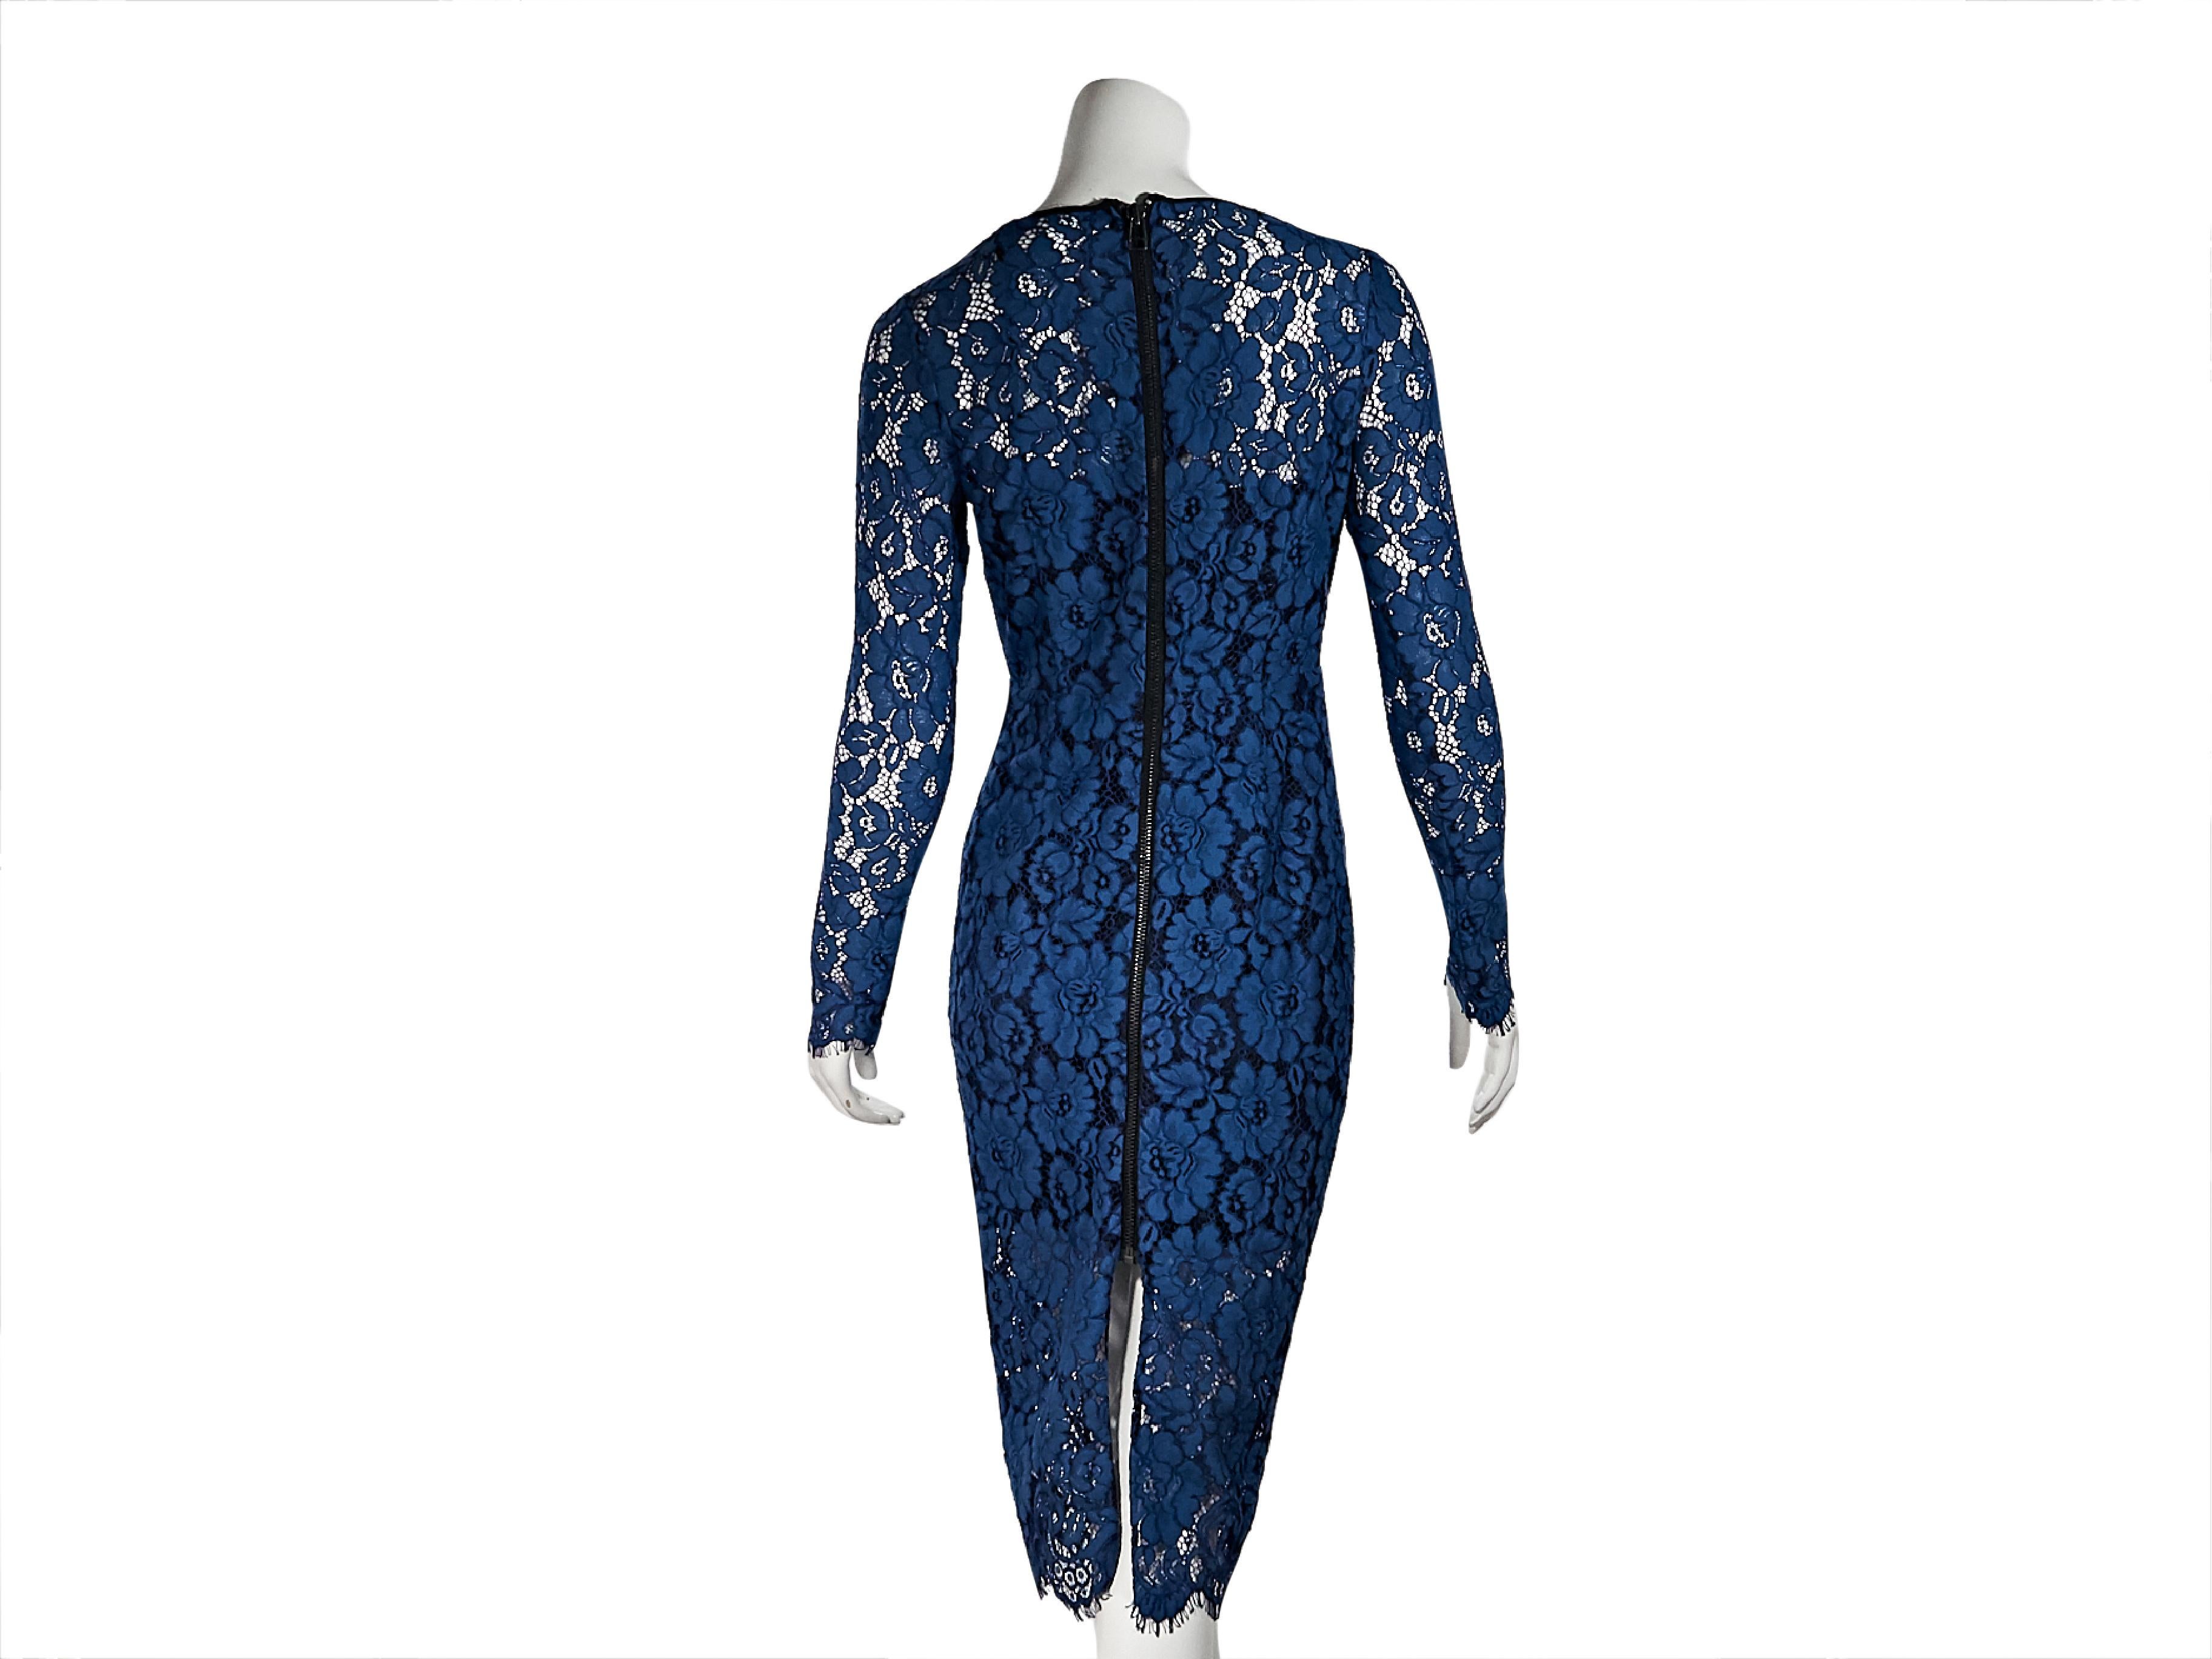 Product details:  Blue lace sheath dress by Veronica Beard.  Jewelneck.  Long sleeves.  Exposed back zip closure.  Slip lining.  Back center hem slit.  30